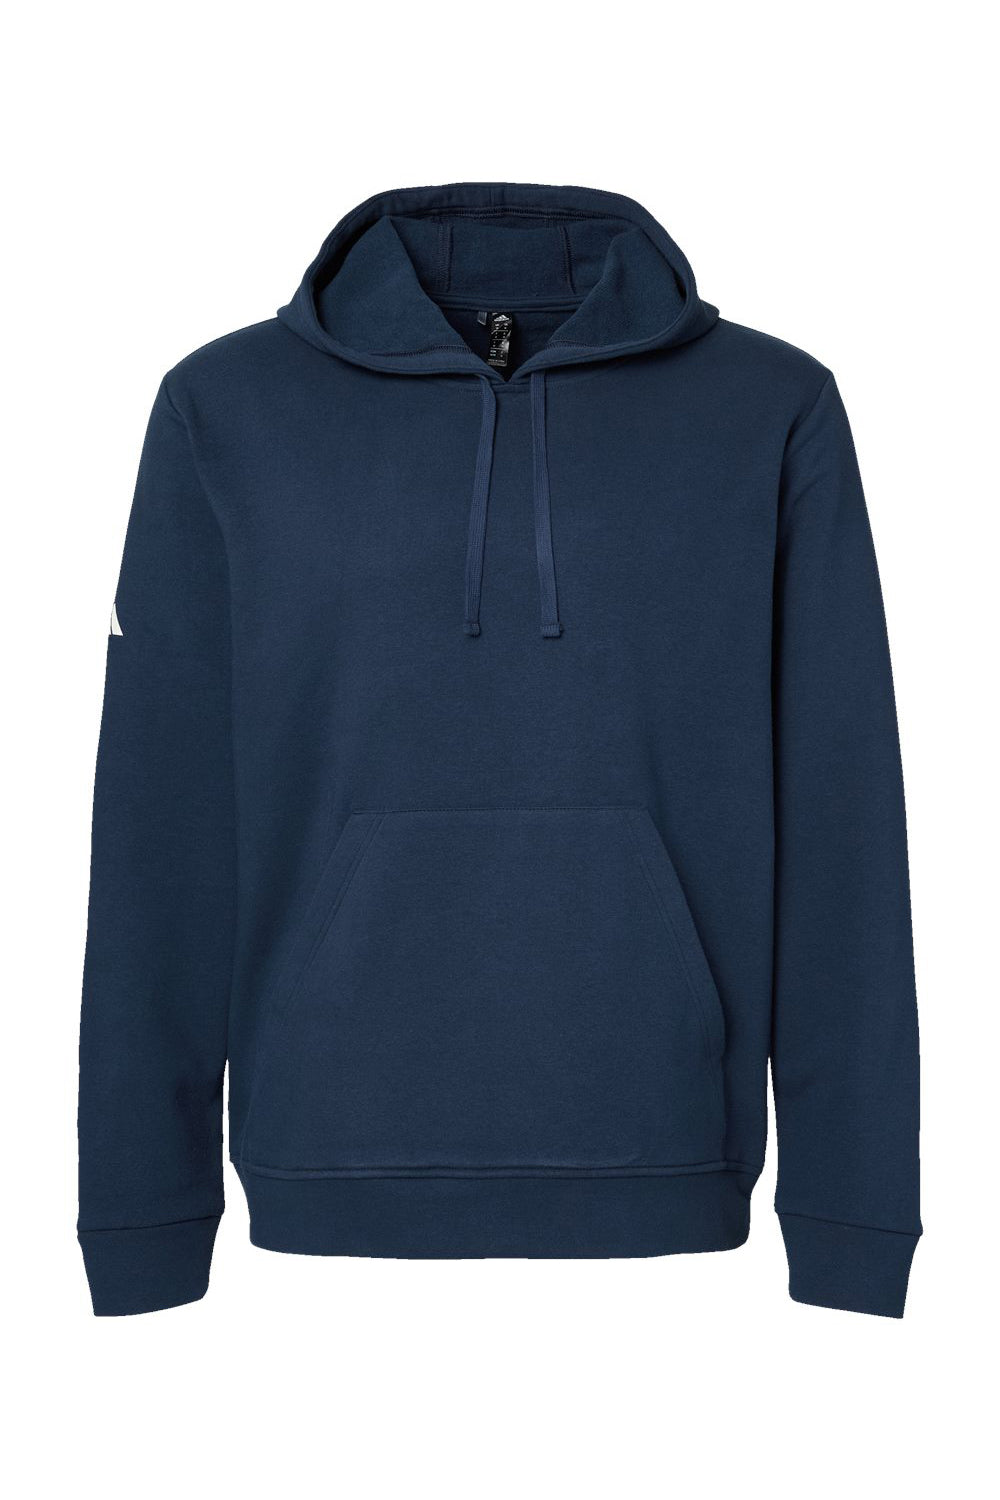 Adidas A432 Mens Fleece Hooded Sweatshirt Hoodie Collegiate Navy Blue Flat Front